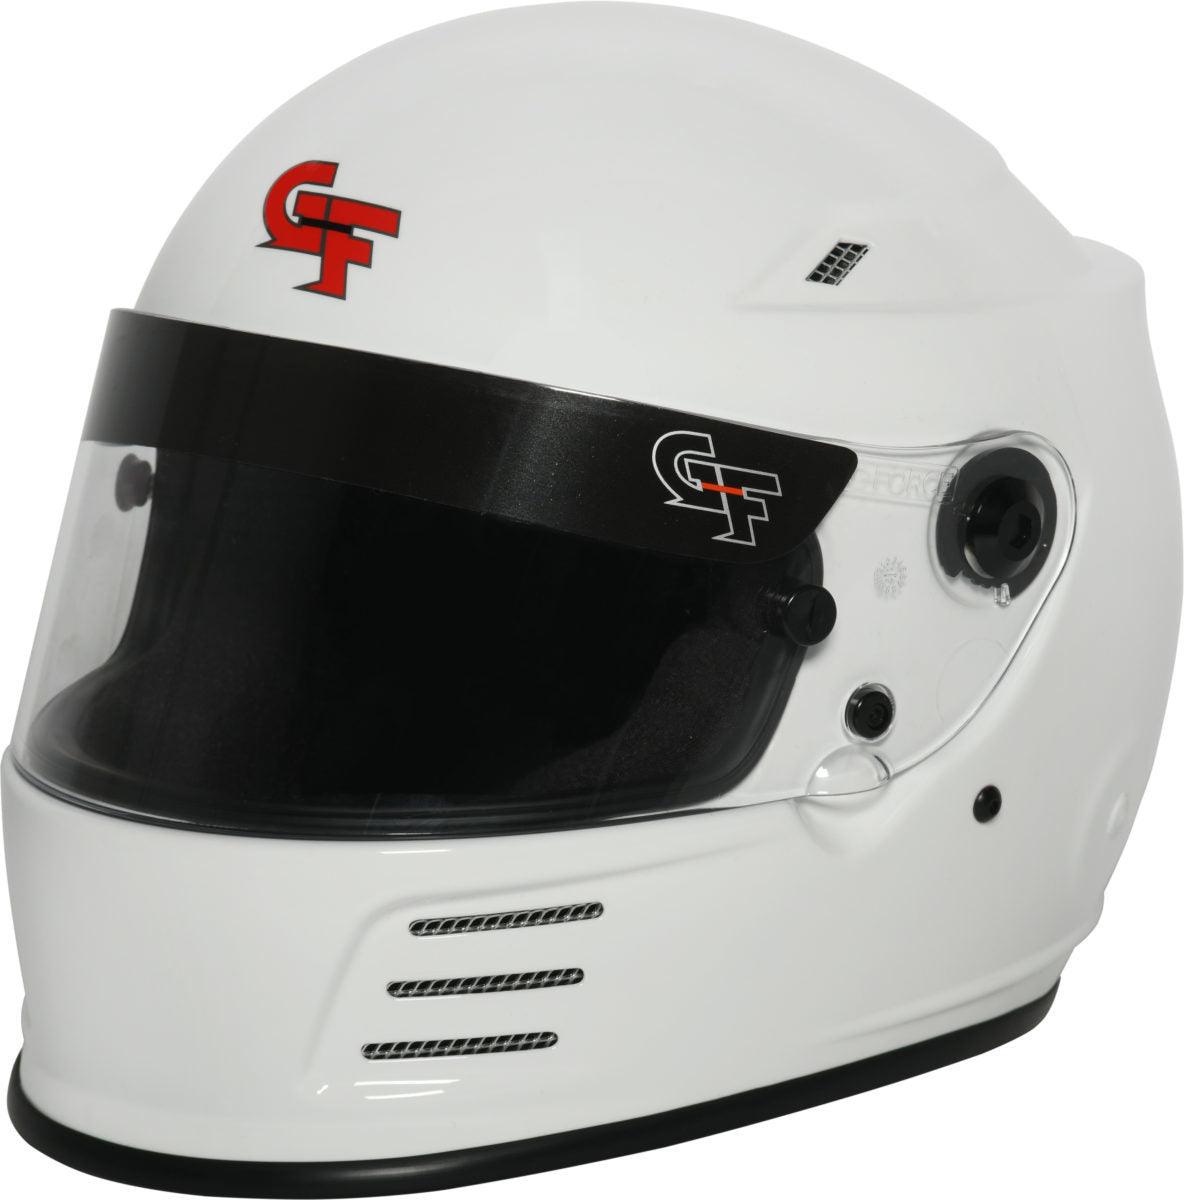 Helmet Revo X-Large White SA2020 - Burlile Performance Products